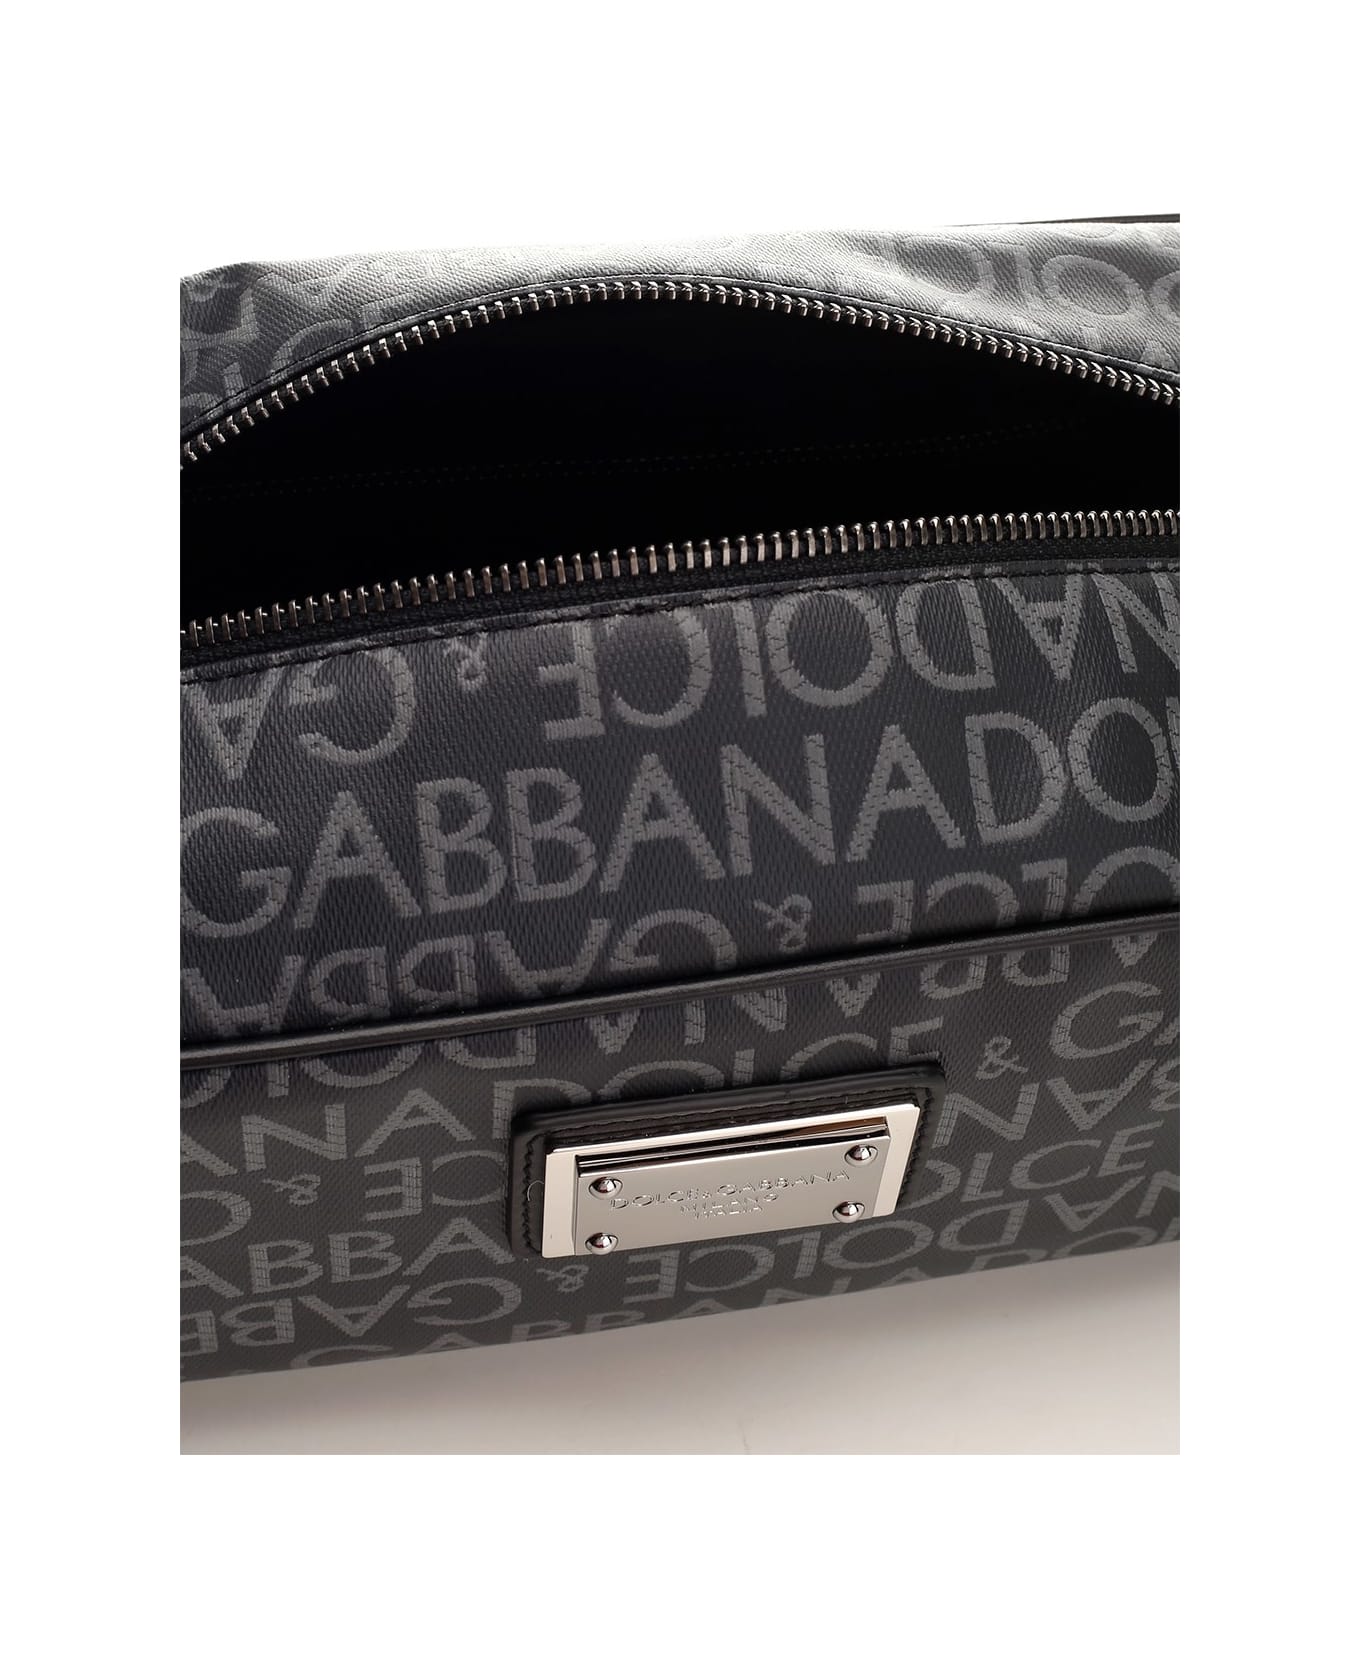 Dolce & Gabbana Logo All-over Top Zip Pouch - Black / Grey